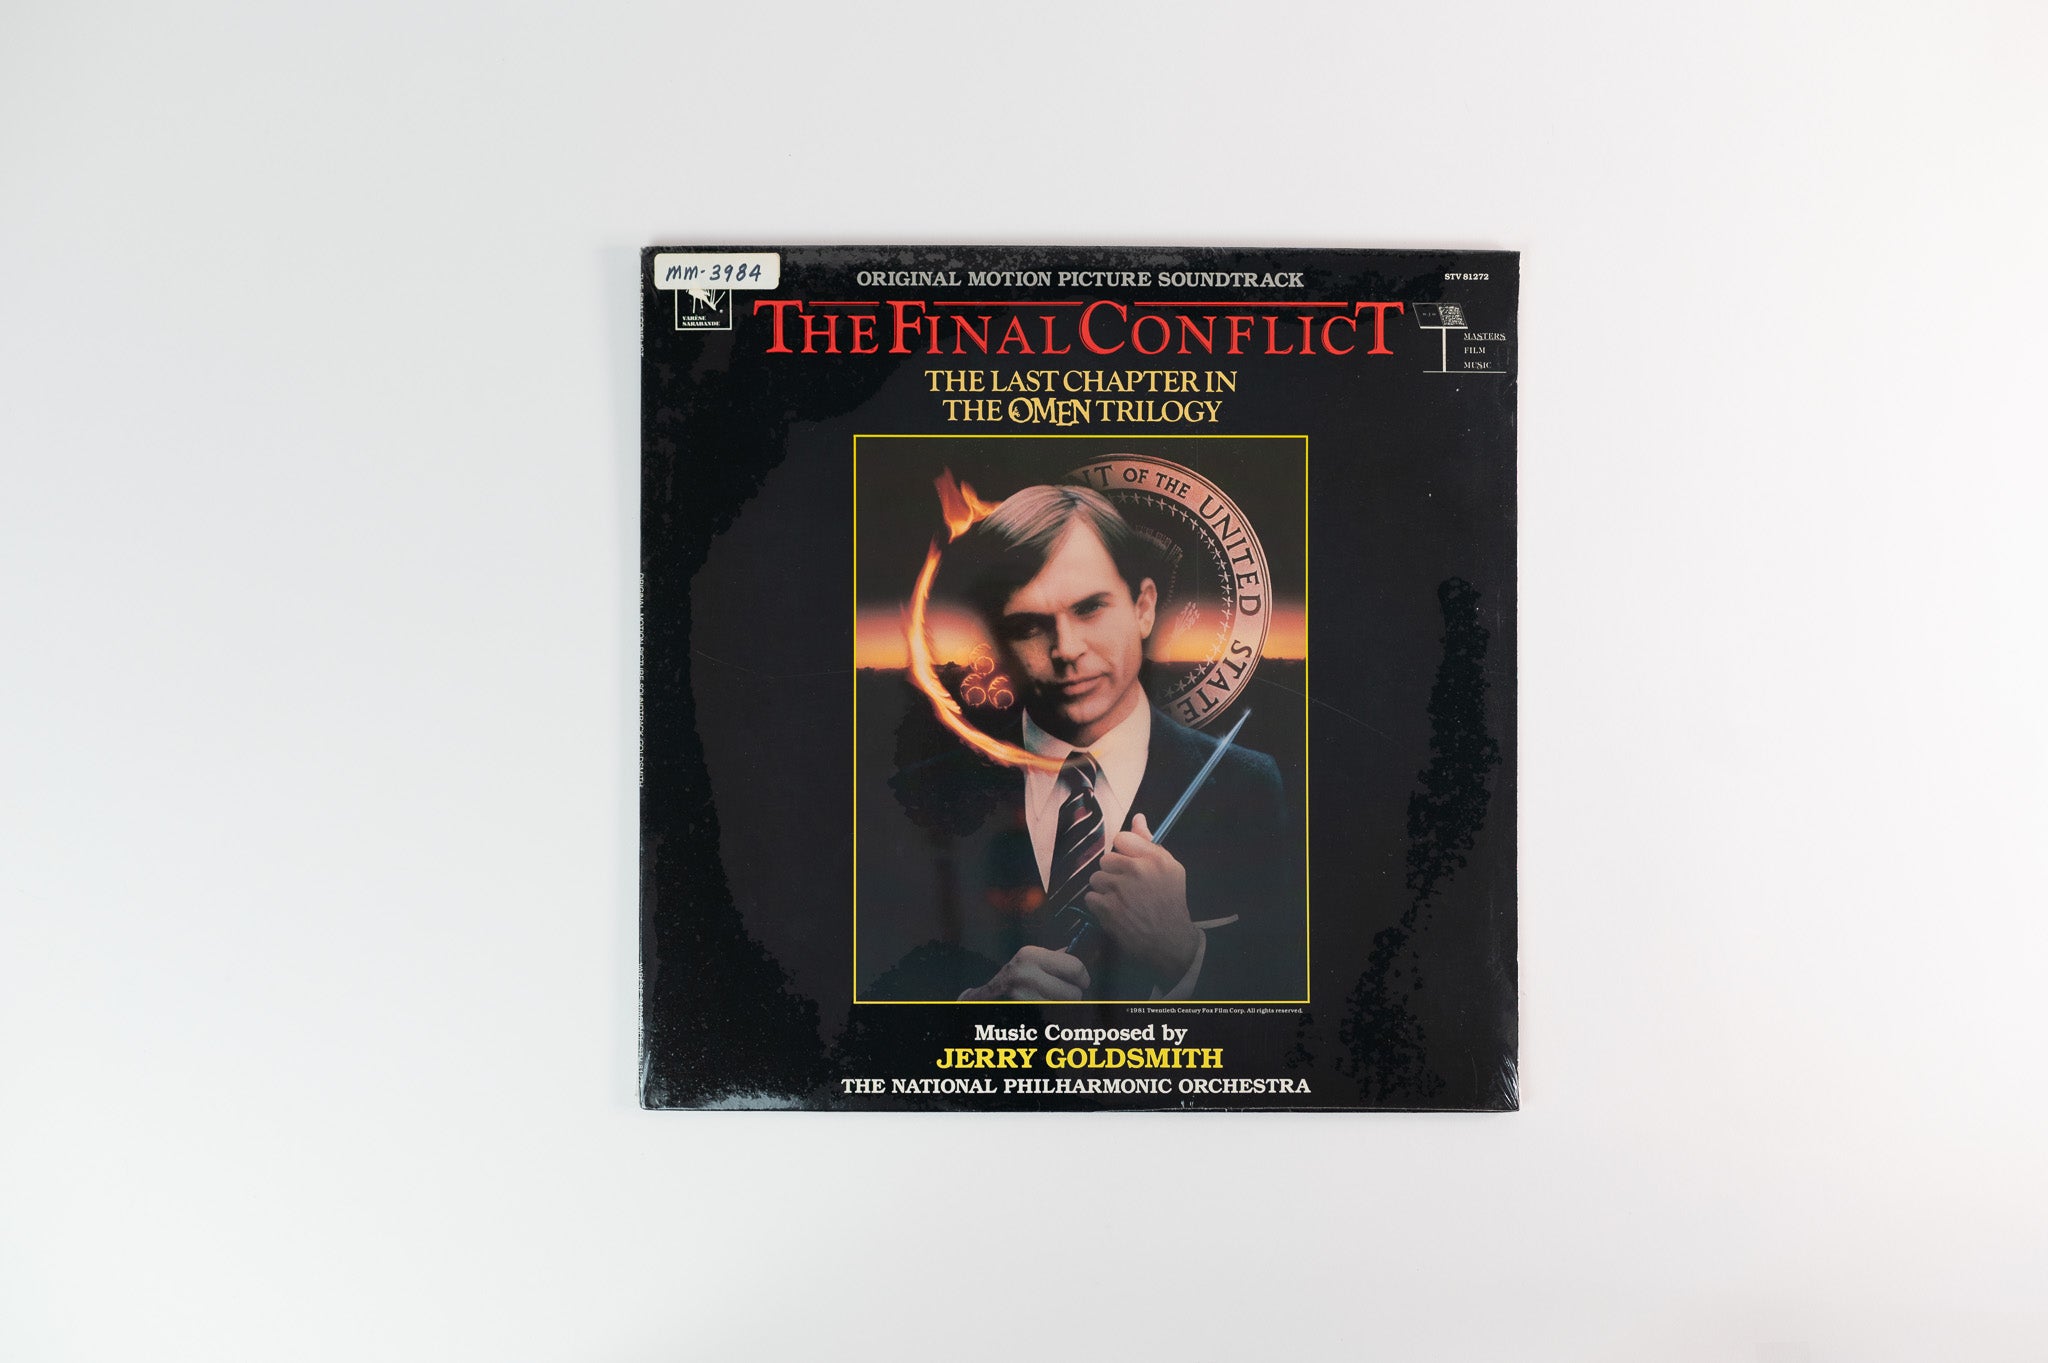 Jerry Goldsmith - The Final Conflict (Original Motion Picture Soundtrack) on Varese Sarabande - Sealed